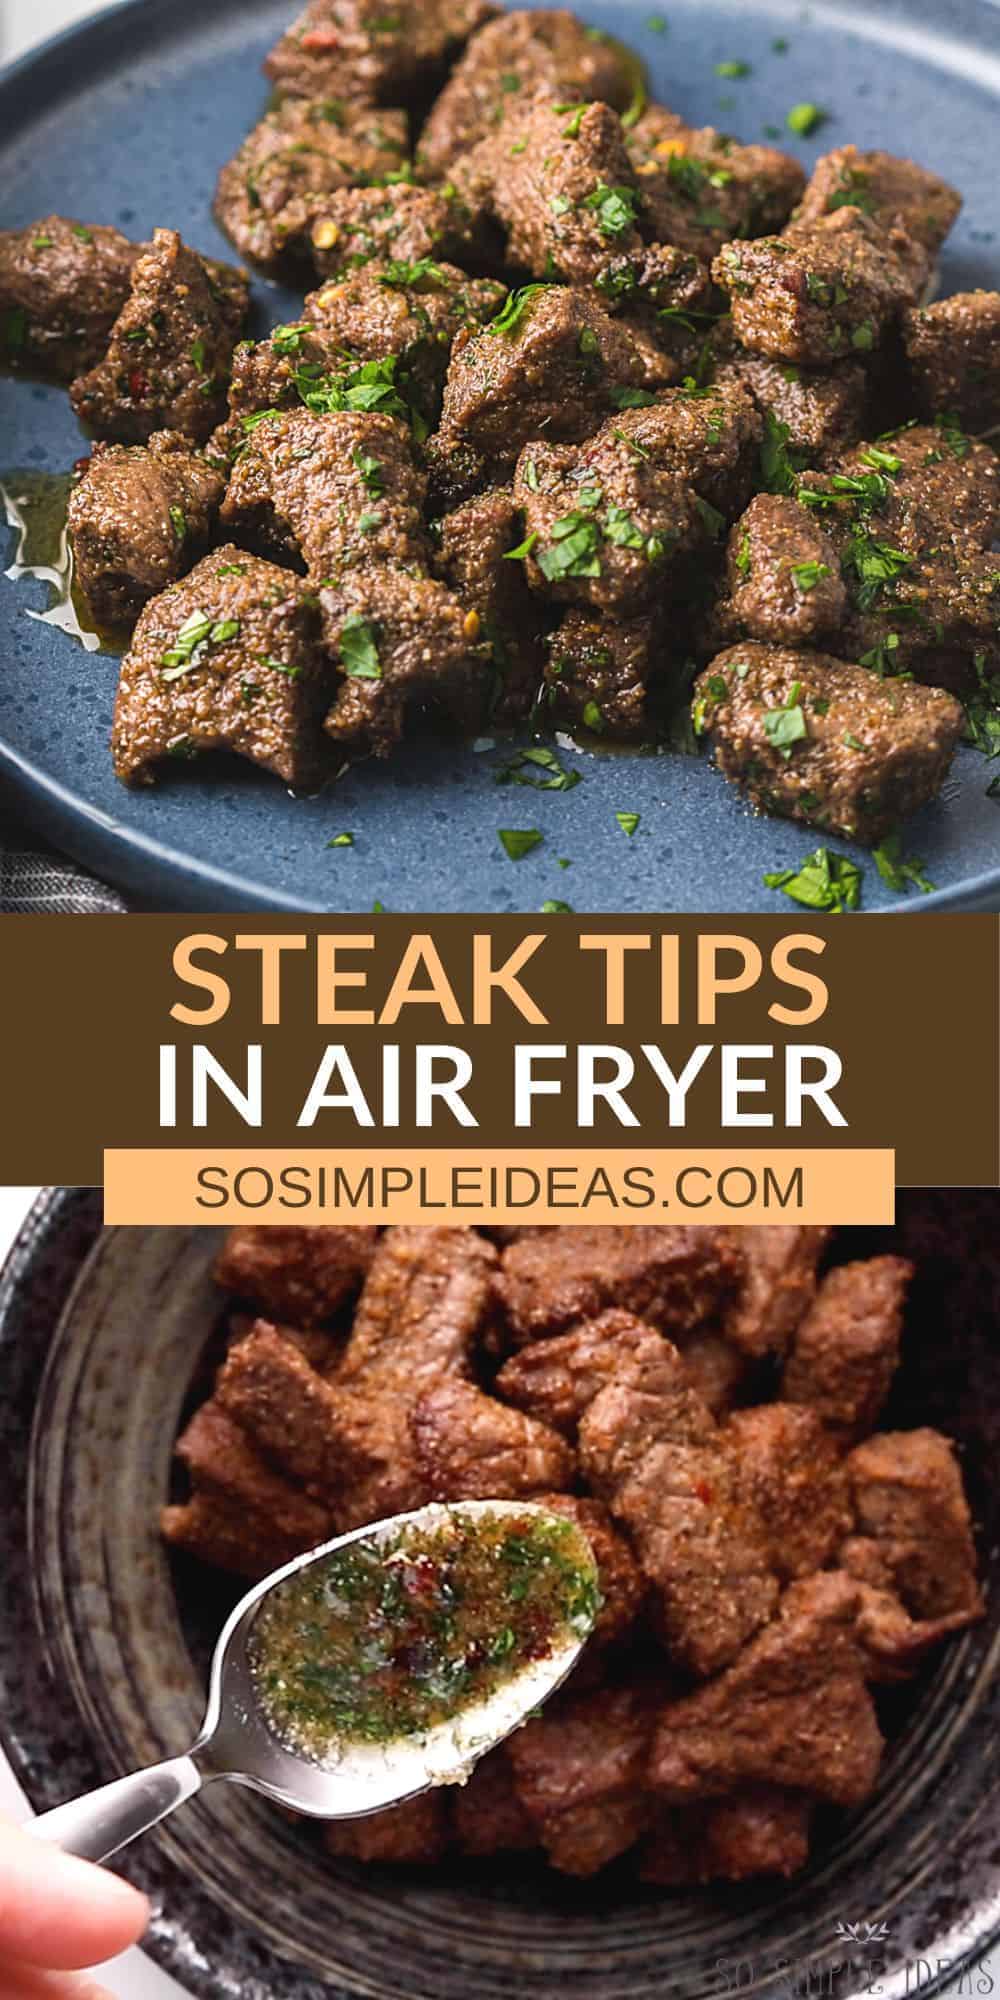 steak tips in air fryer pinterest image.